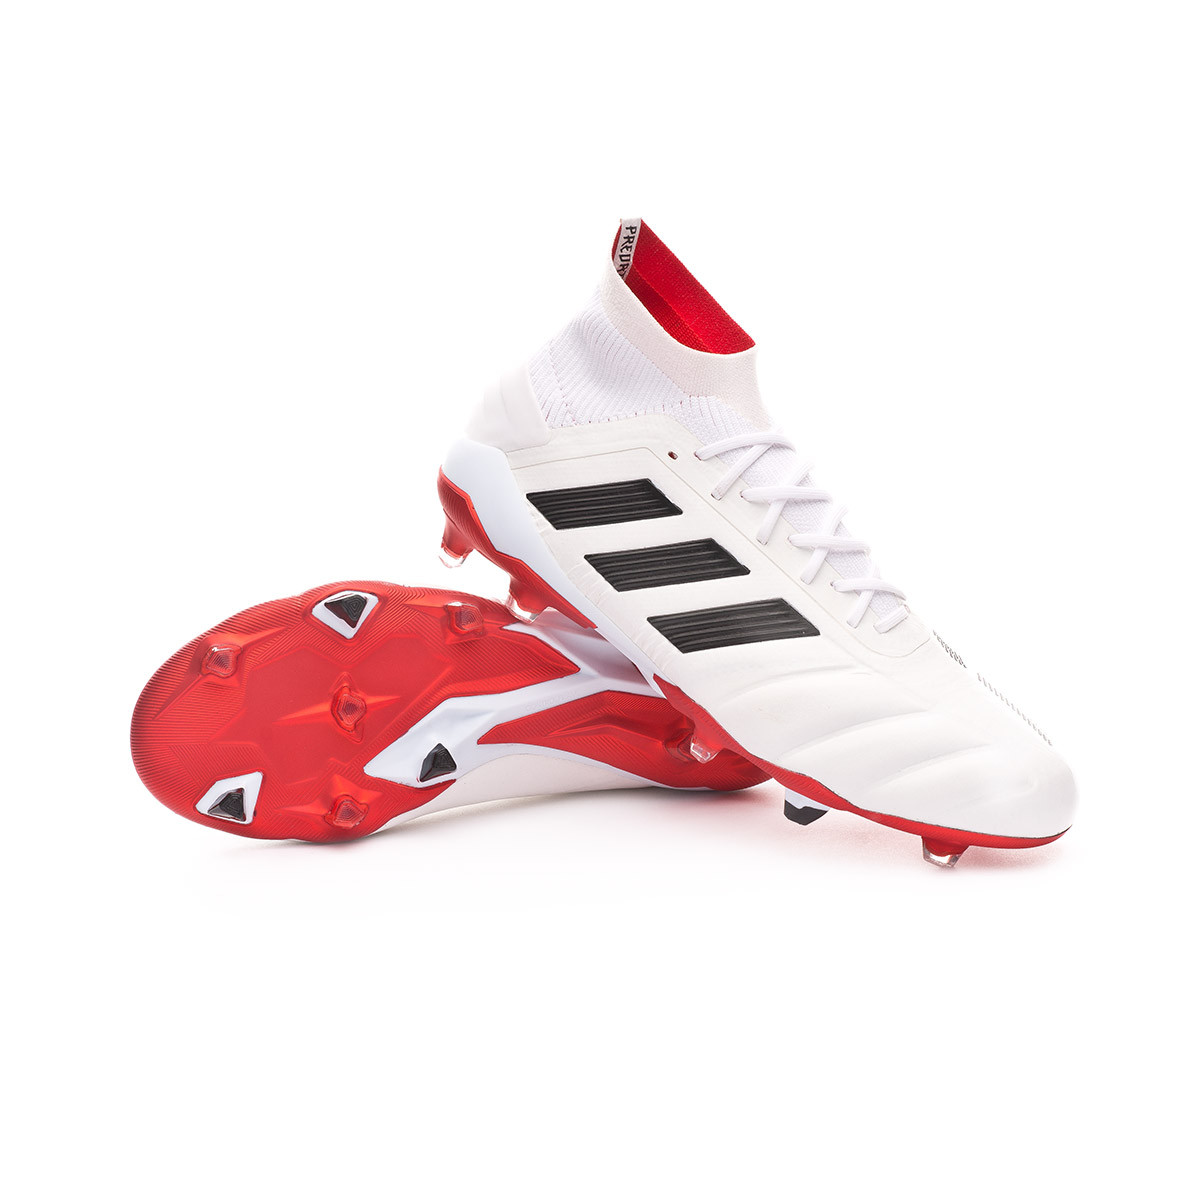 Football Boots adidas Predator 19.1 FG 